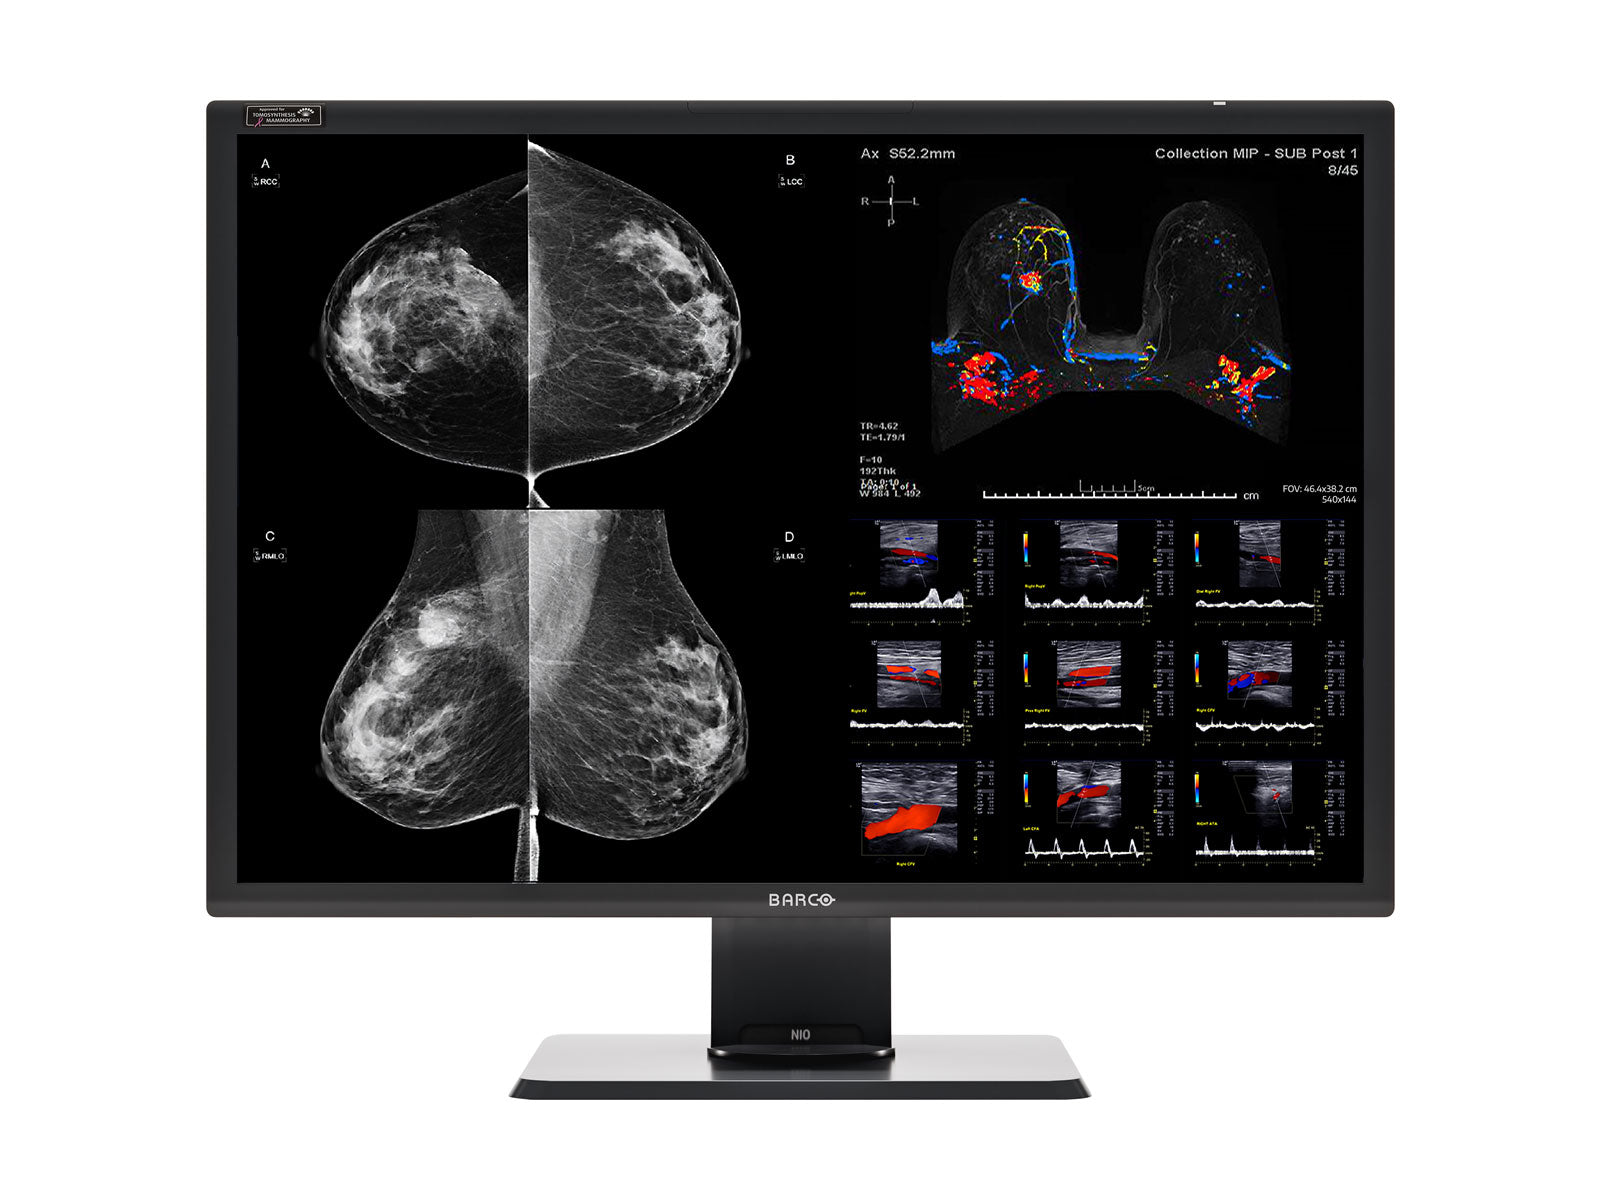 Barco Nio Fusion MDNC-12130 12MP 31" Color Tomosynthesis 3D-DBT Mammography Display Monitors.com 